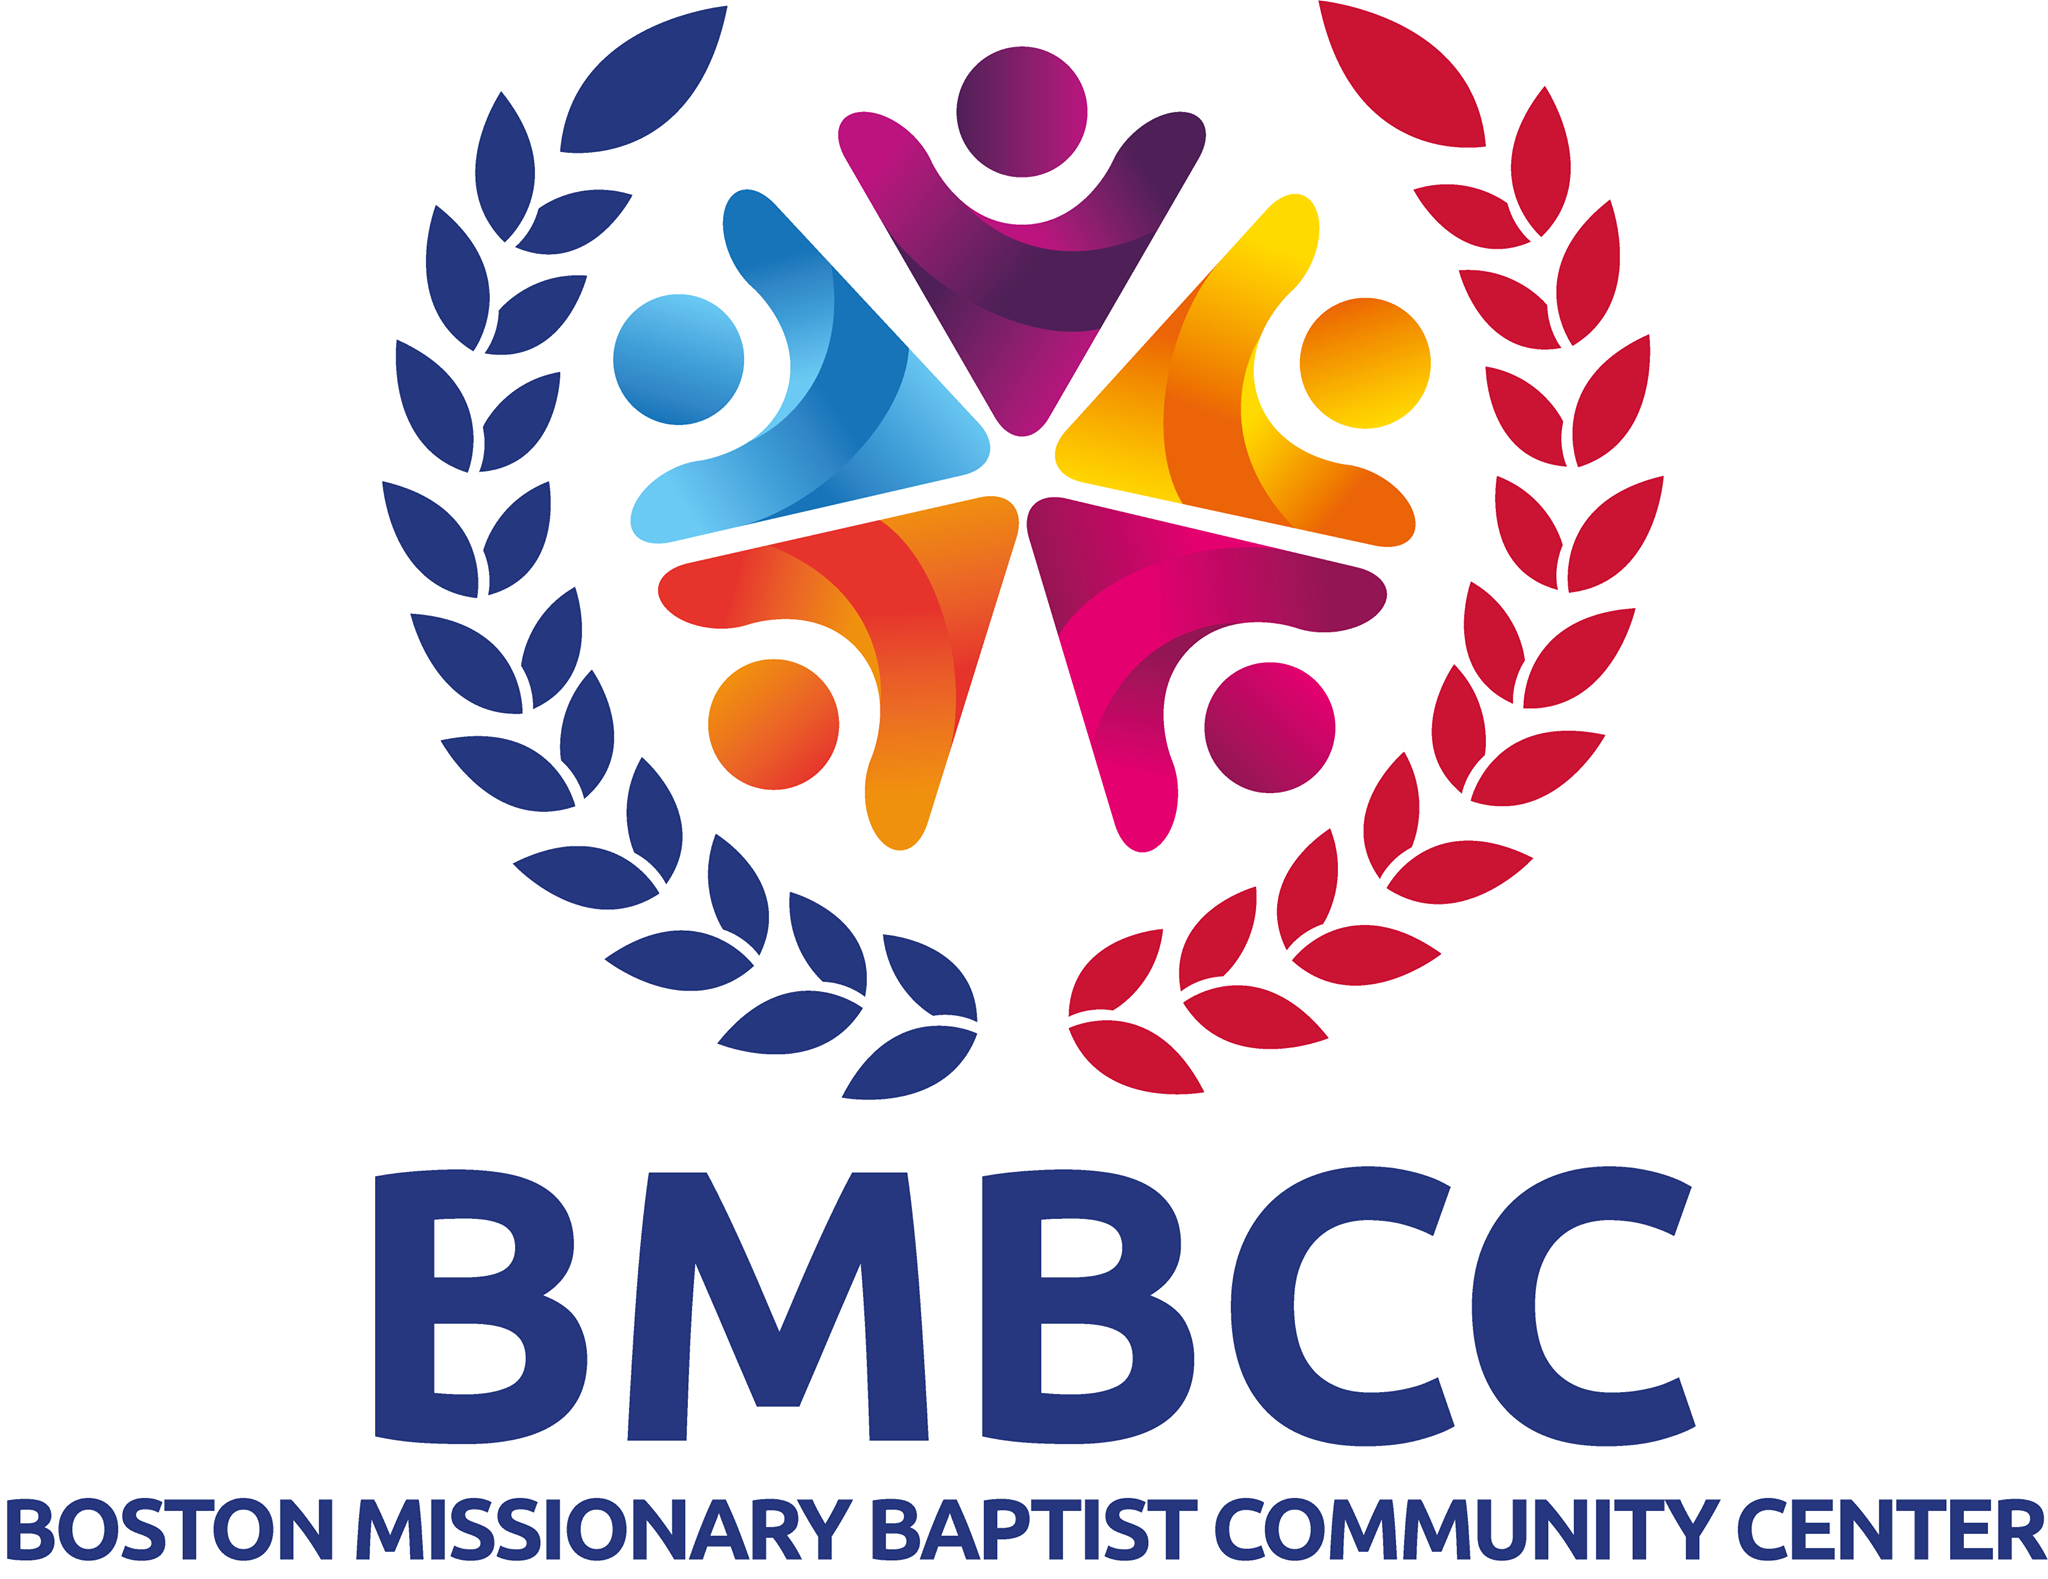 Boston Missionary Baptist Community Center